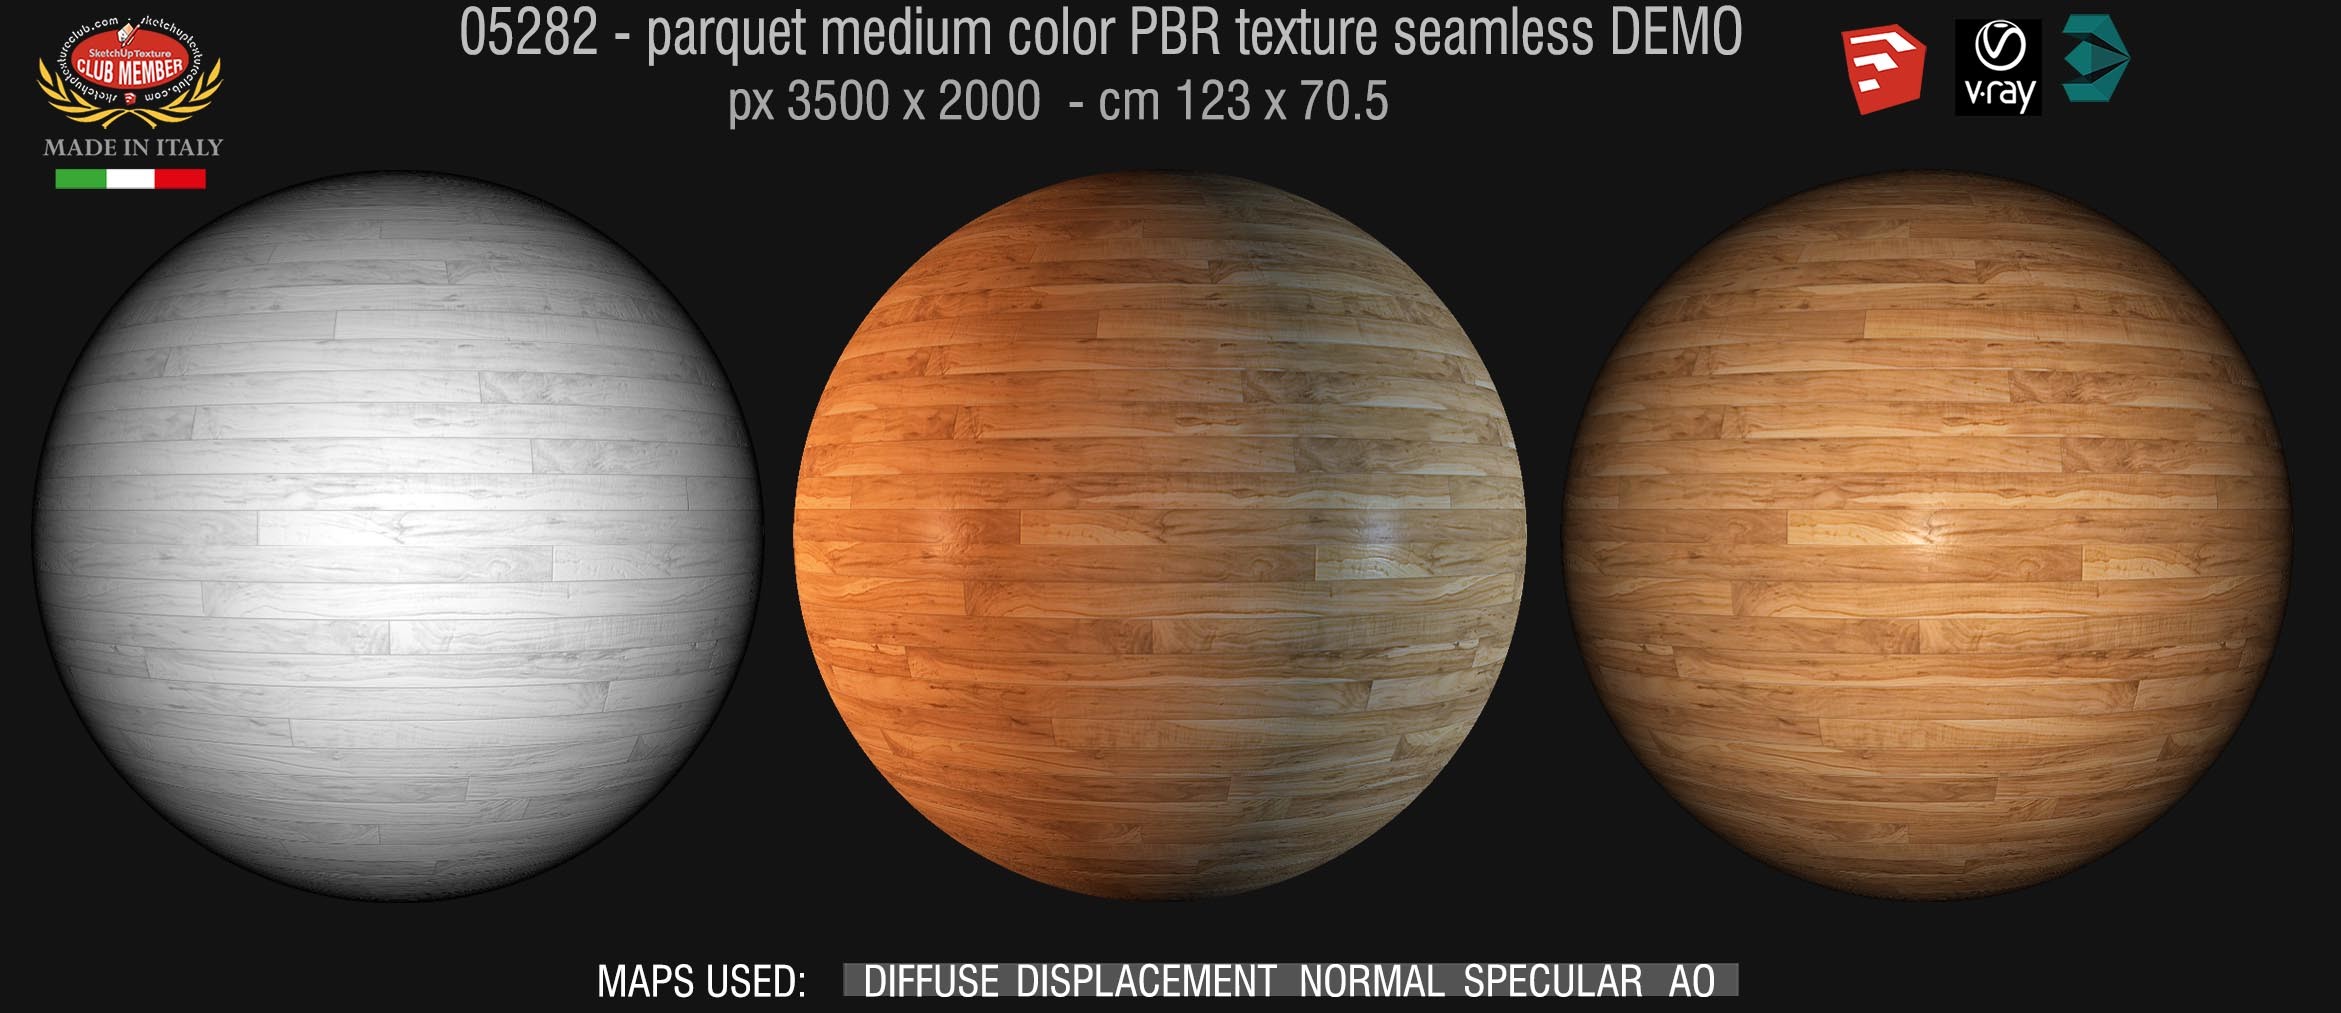 05282 parquet medium color PBR texture seamless DEMO